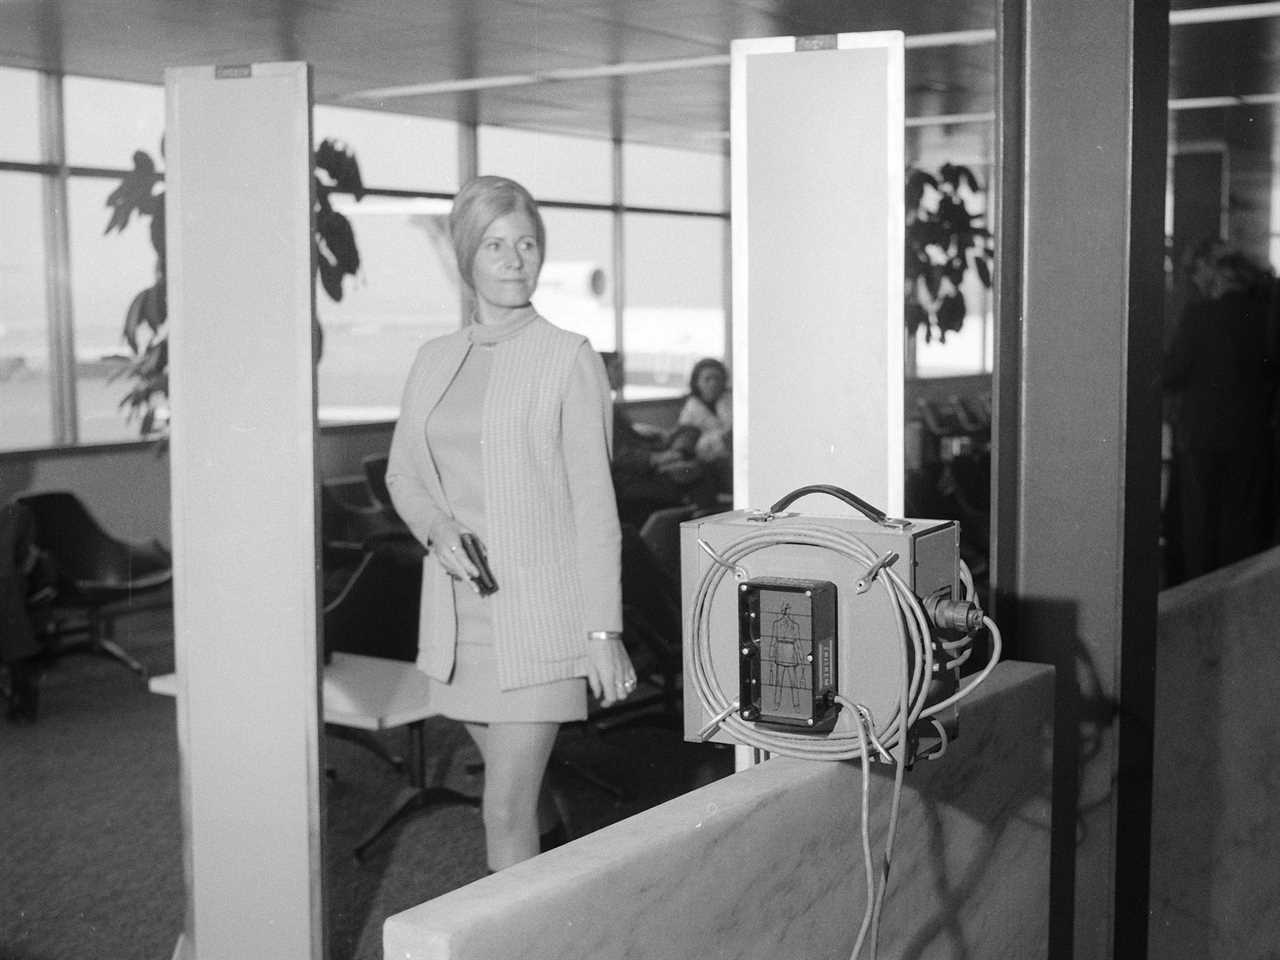 An airport metal detector in 1971.